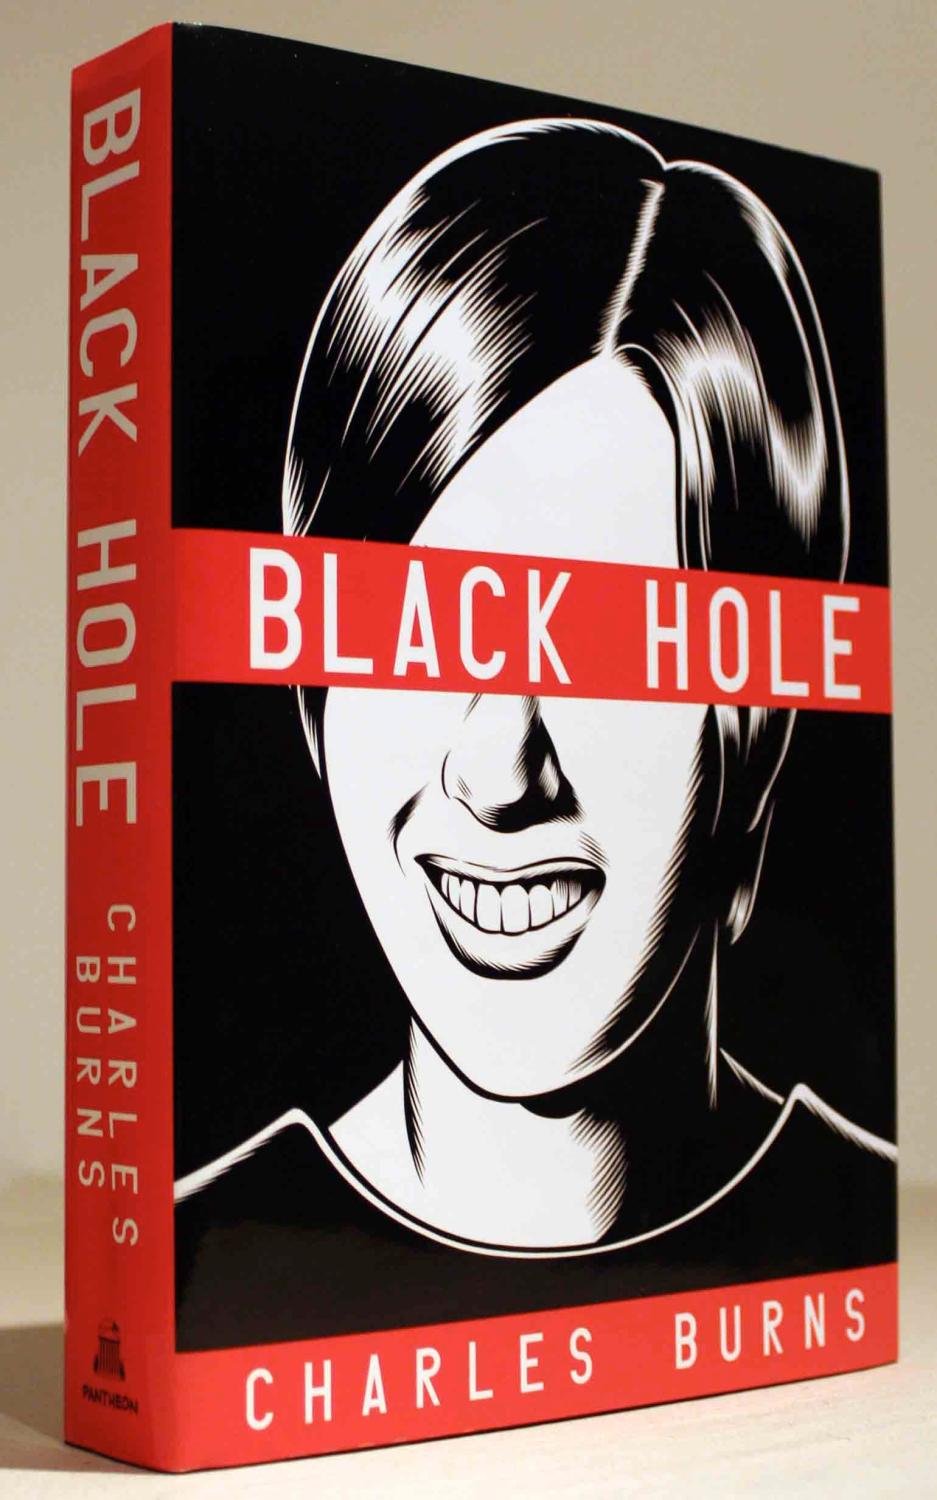 CHARLES BURNS BLACK HOLE EXTRA LARGE ARTIST STUDIO HARDCOVER ARTWORK EDITION